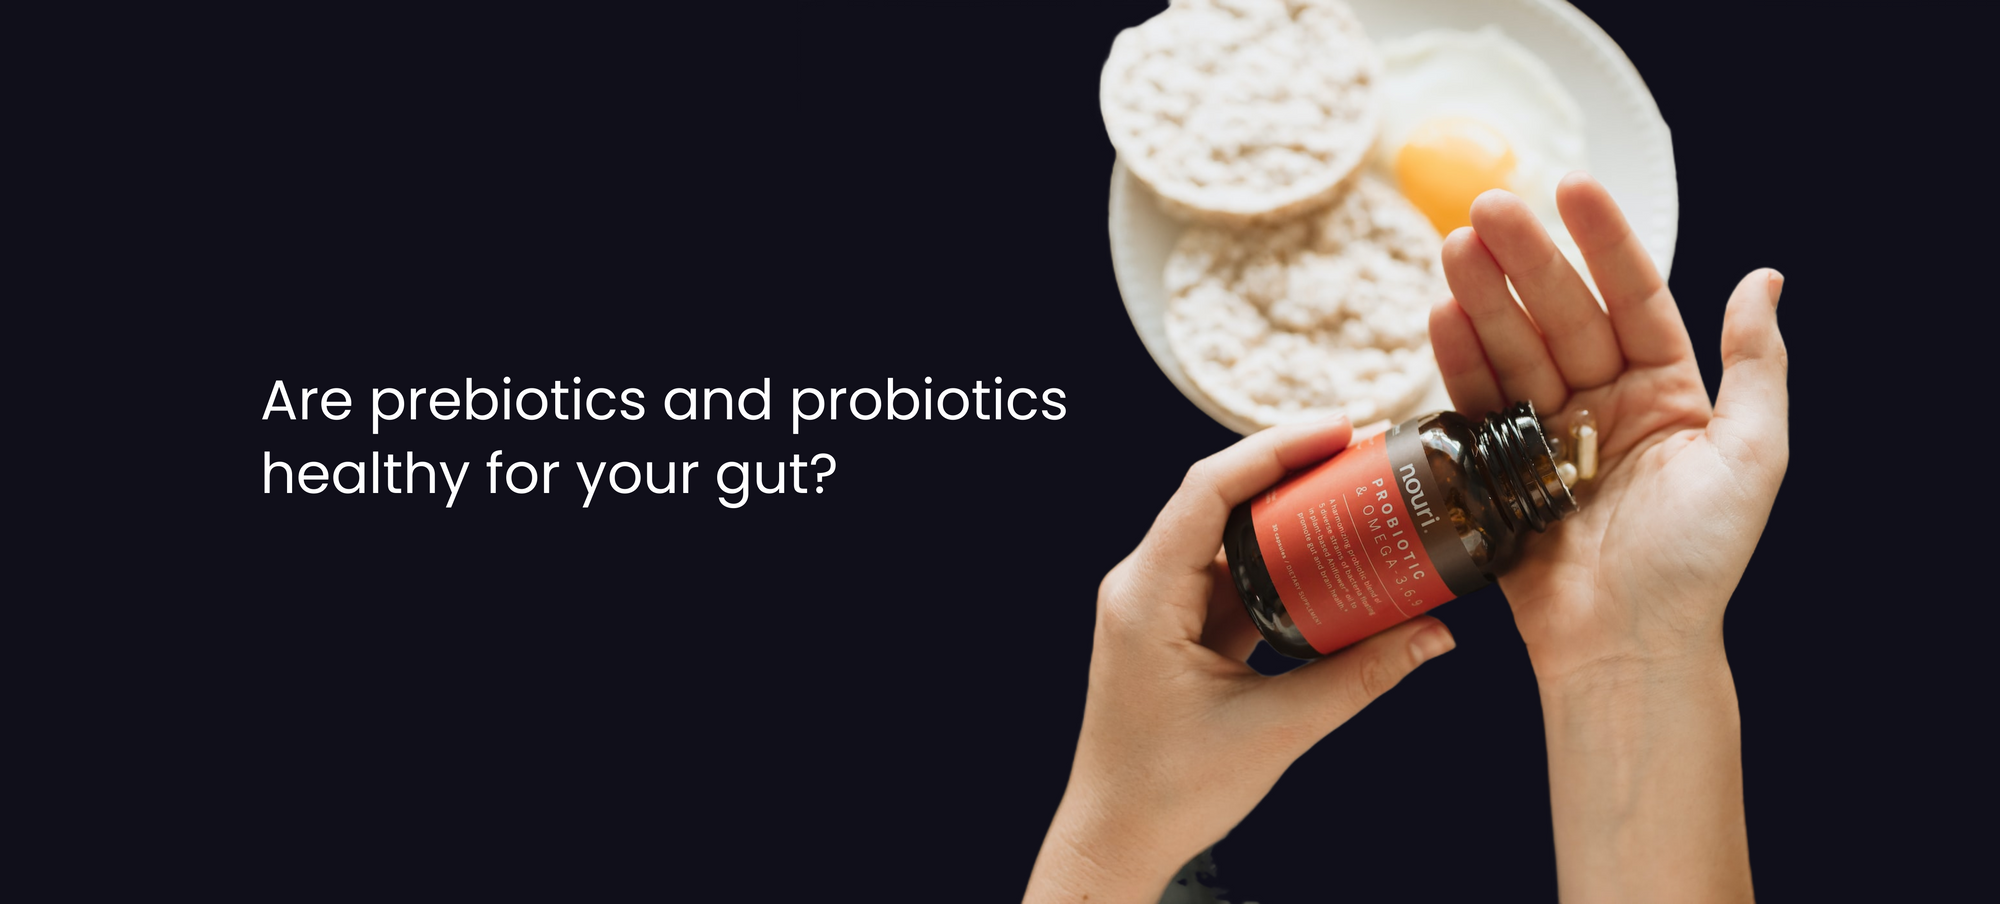 Are prebiotics and probiotics healthy for you gut?